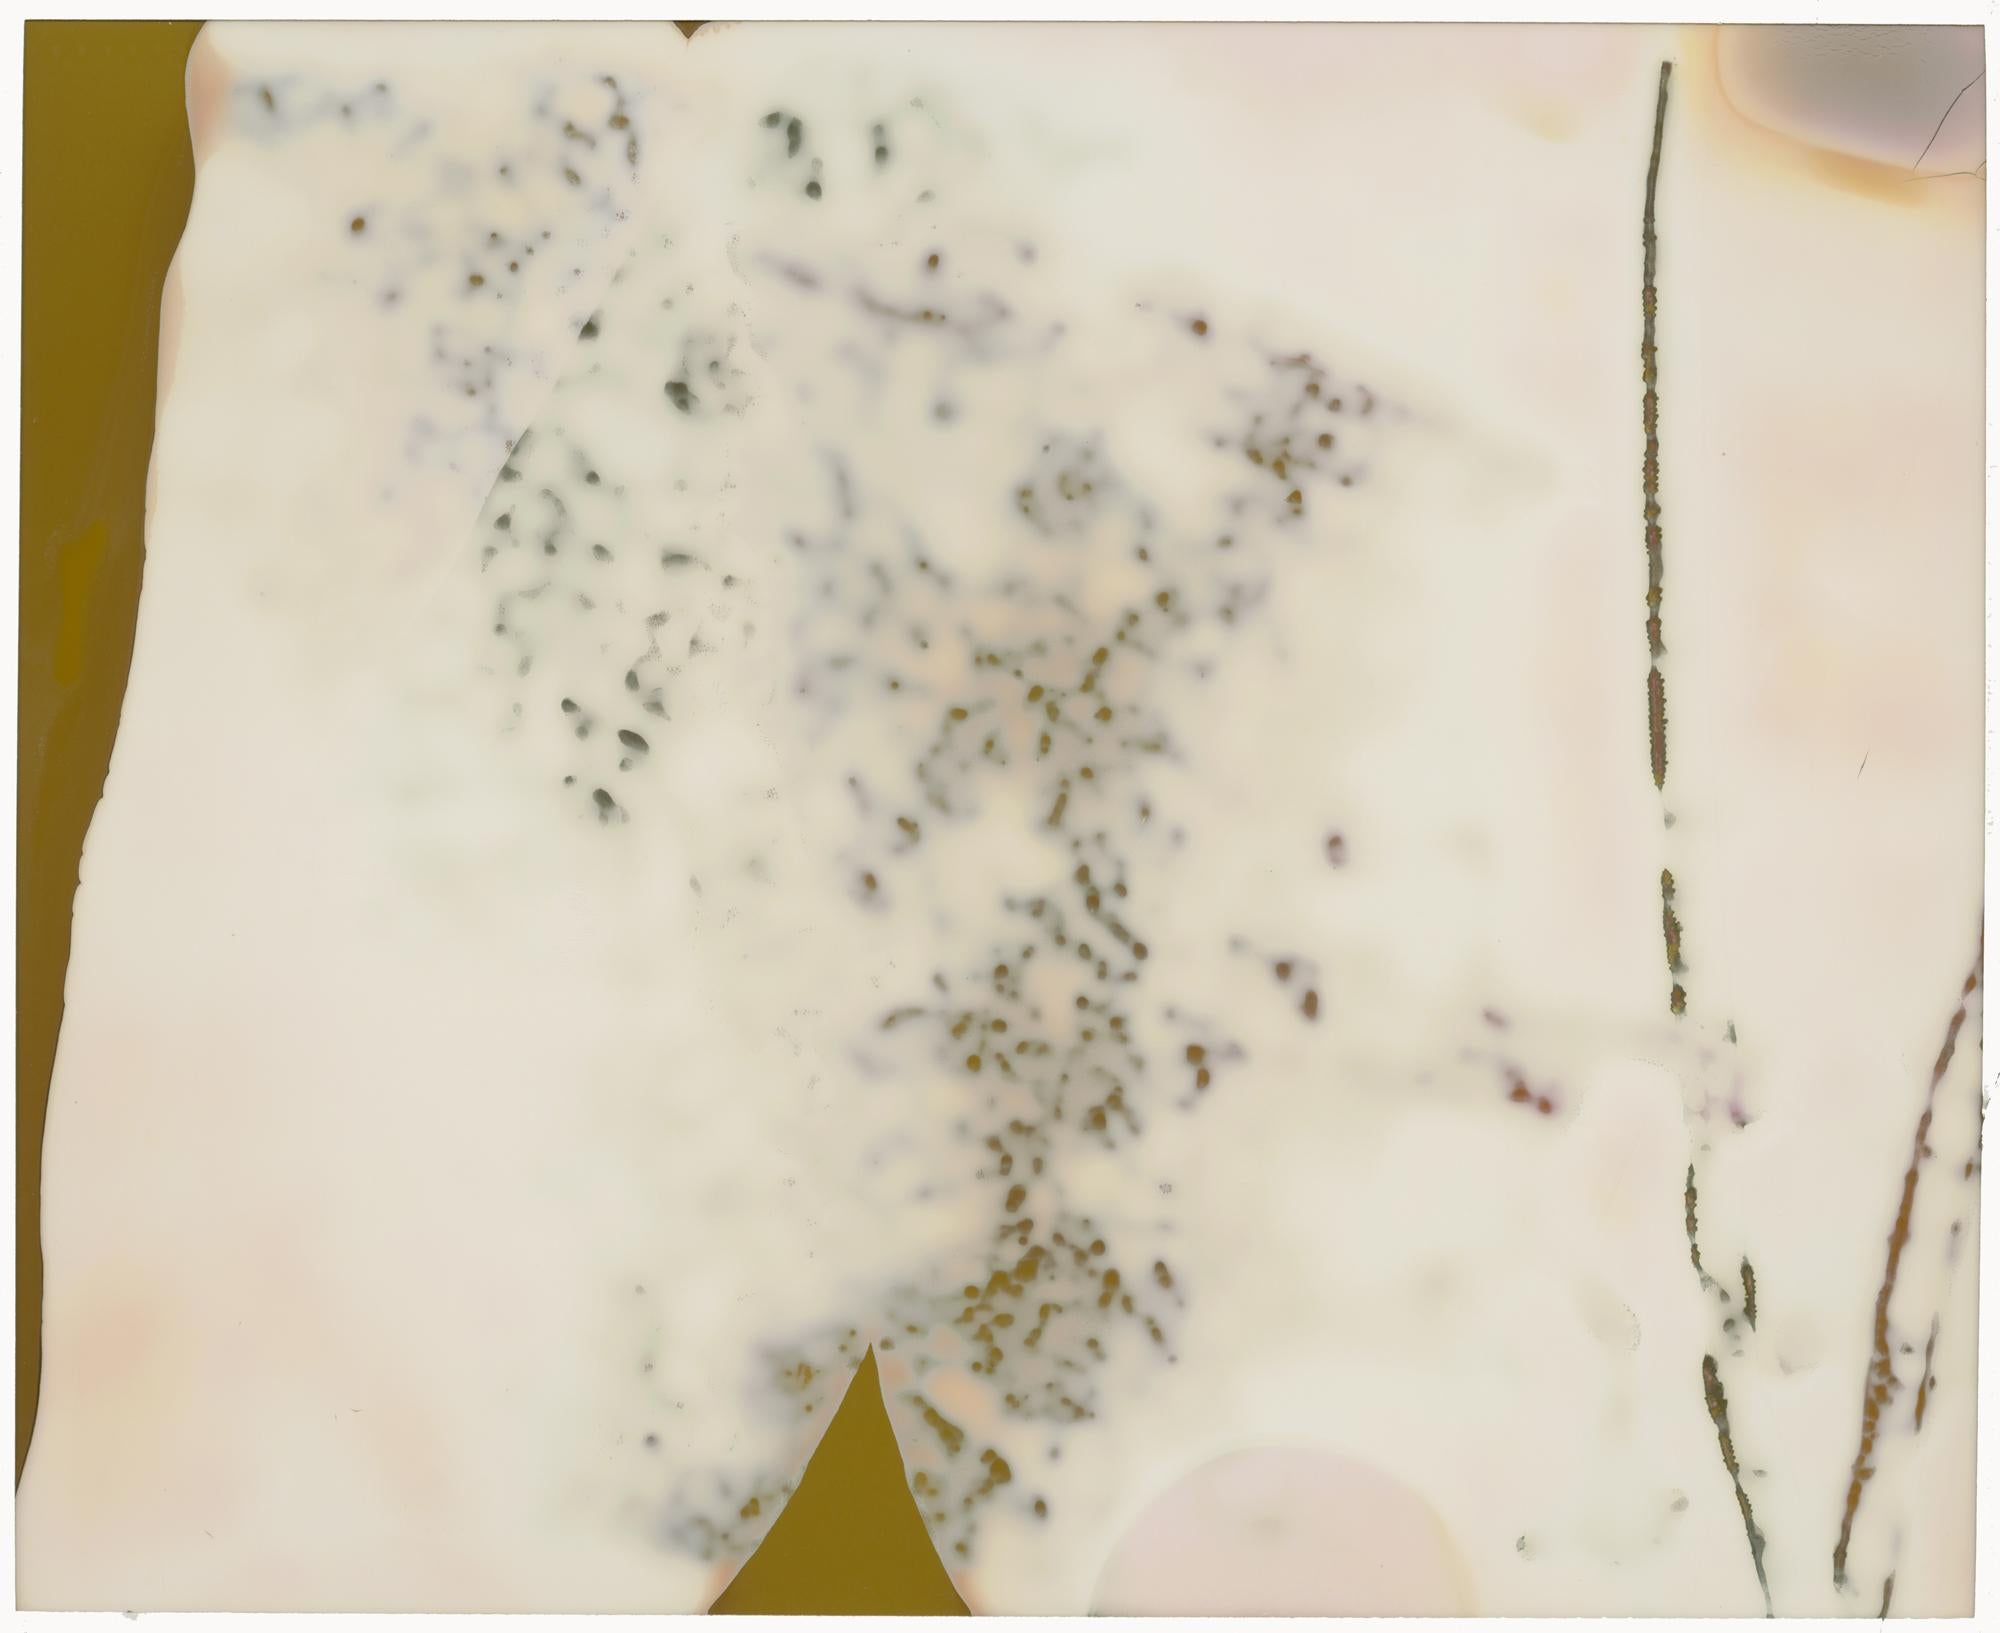 Stefanie Schneider Landscape Photograph - Revisions (Deconstructivism) - Contemporary, Expired Polaroid